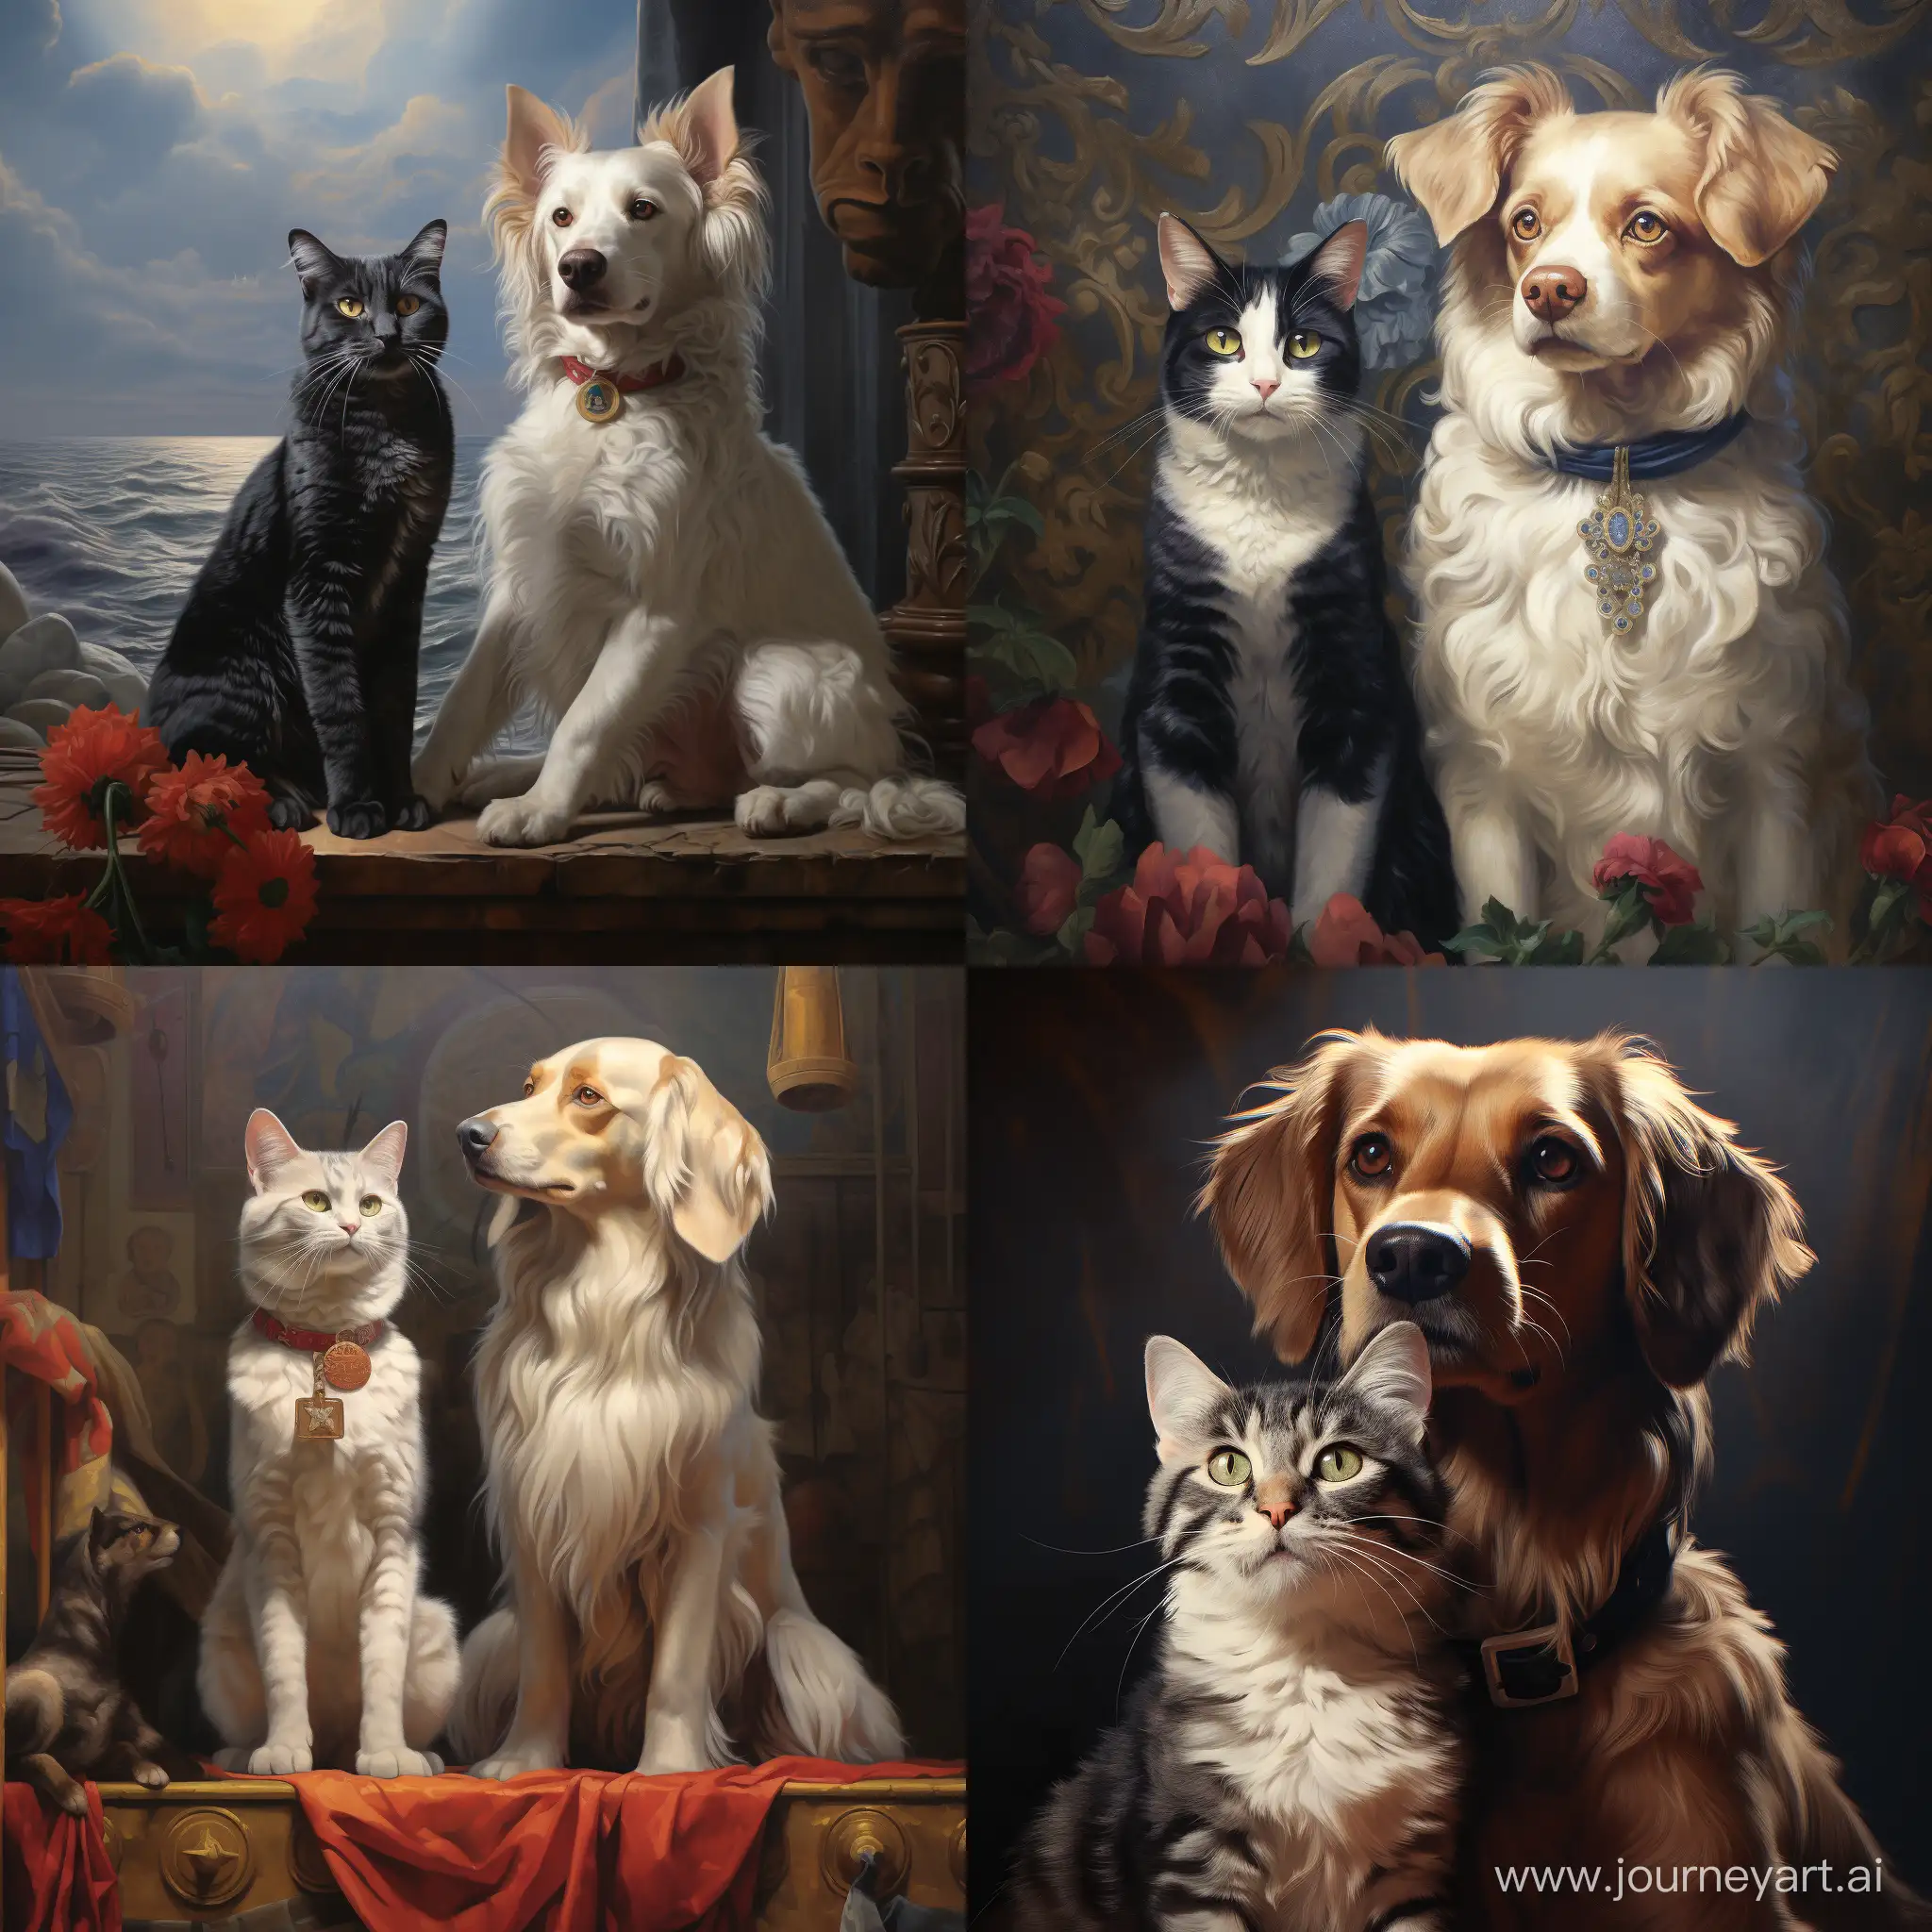 Charming-Foglio-Cat-and-Dog-Art-Harmony-in-a-11-Aspect-Ratio-27783